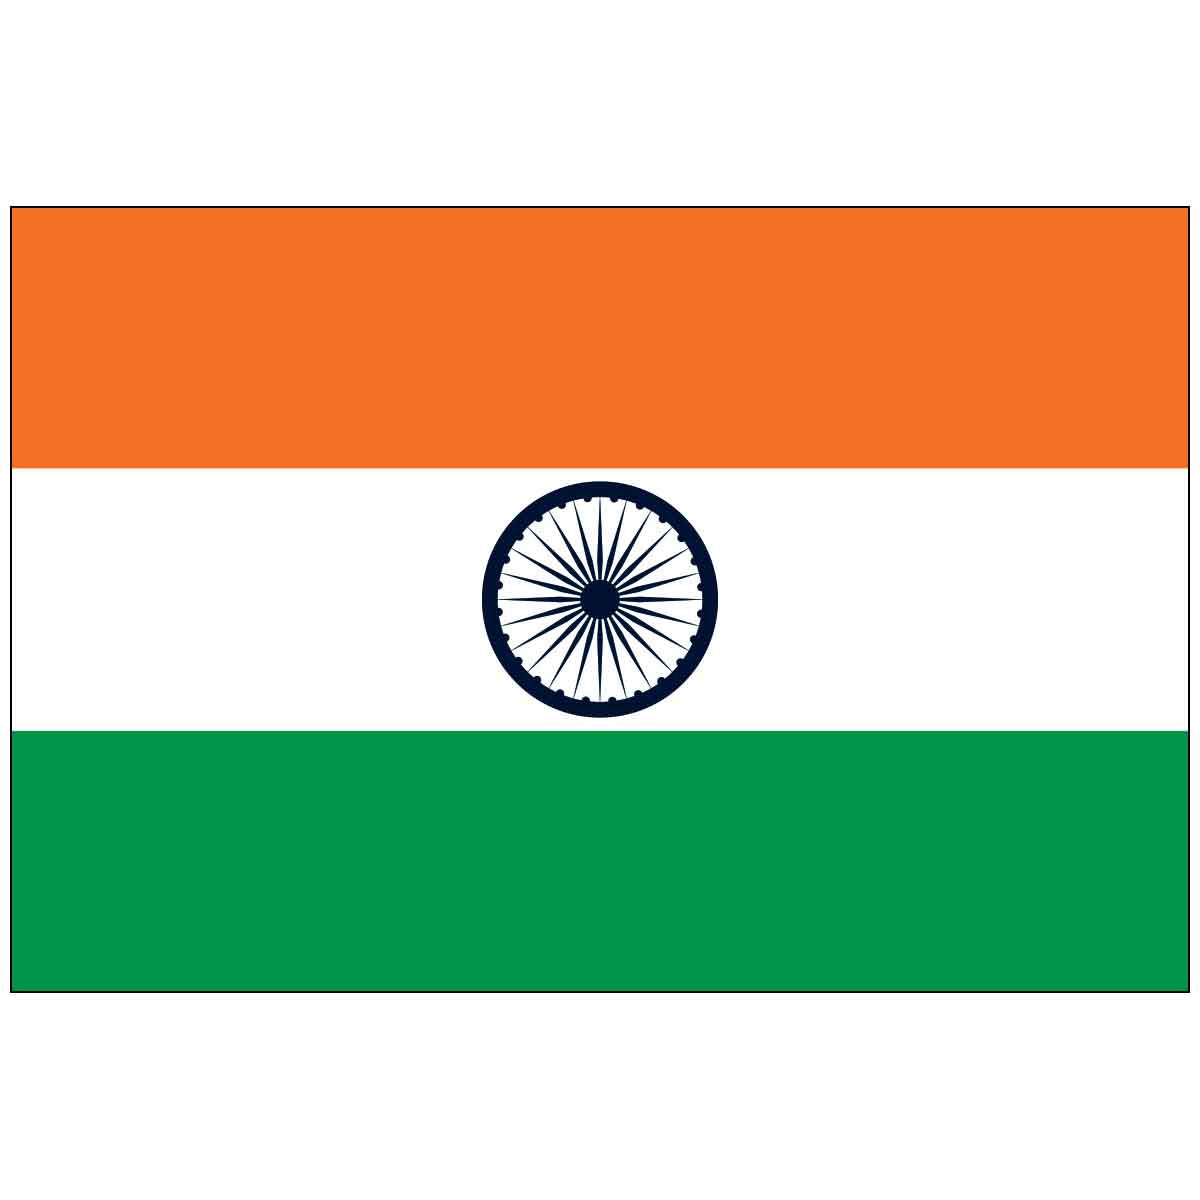 3' x 5' India (UN) World Flag